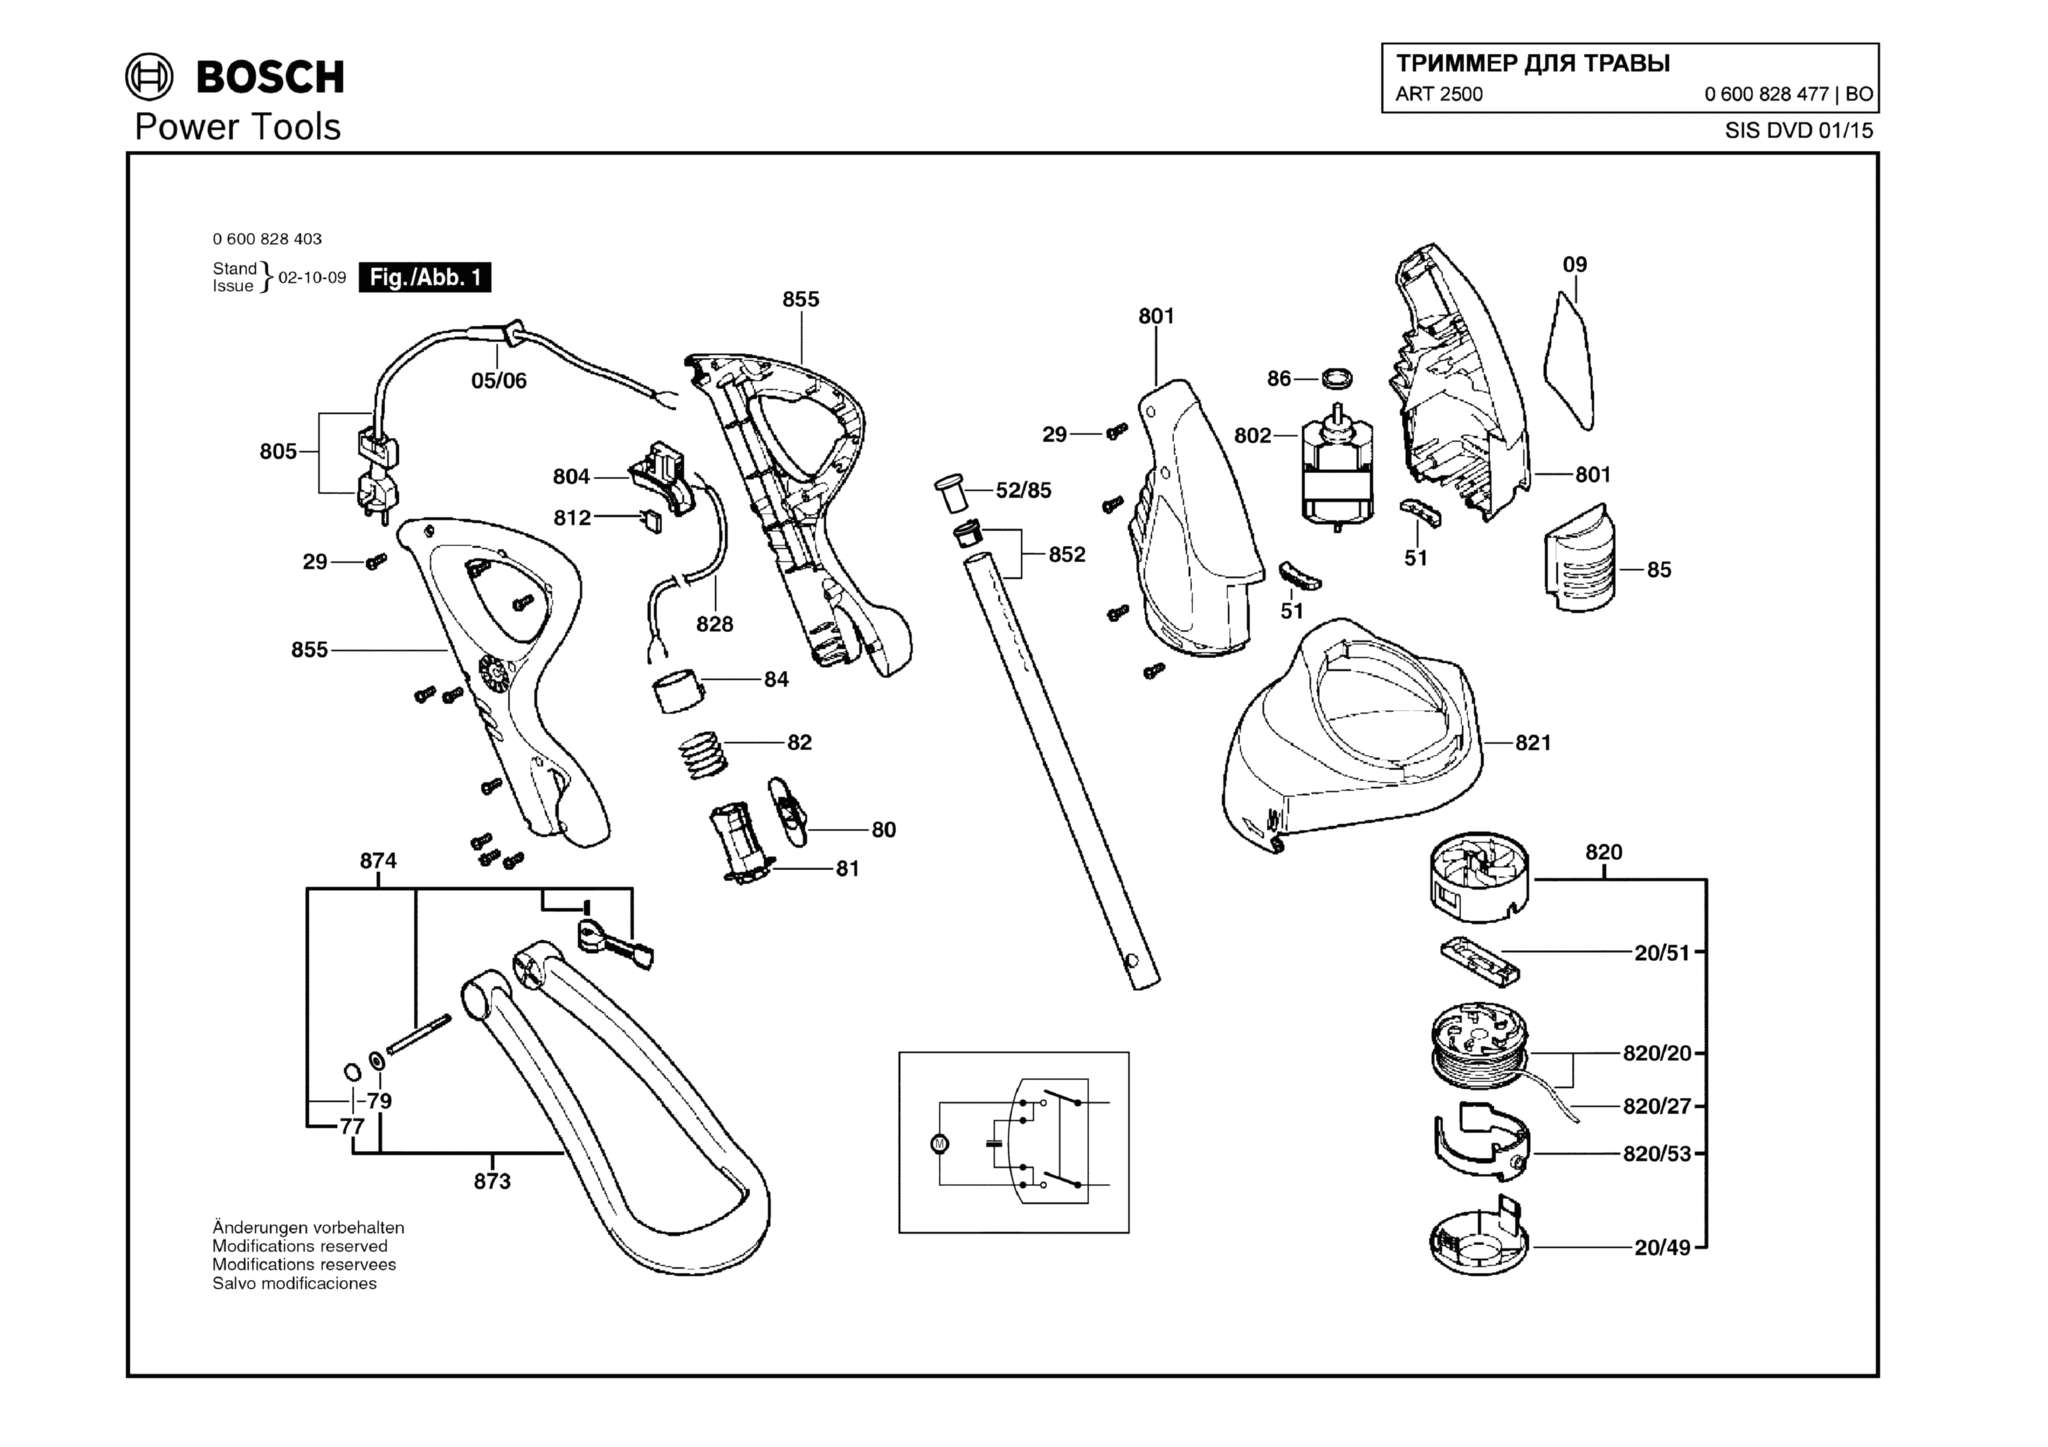 Запчасти, схема и деталировка Bosch ART 2500 (ТИП 0600828477)